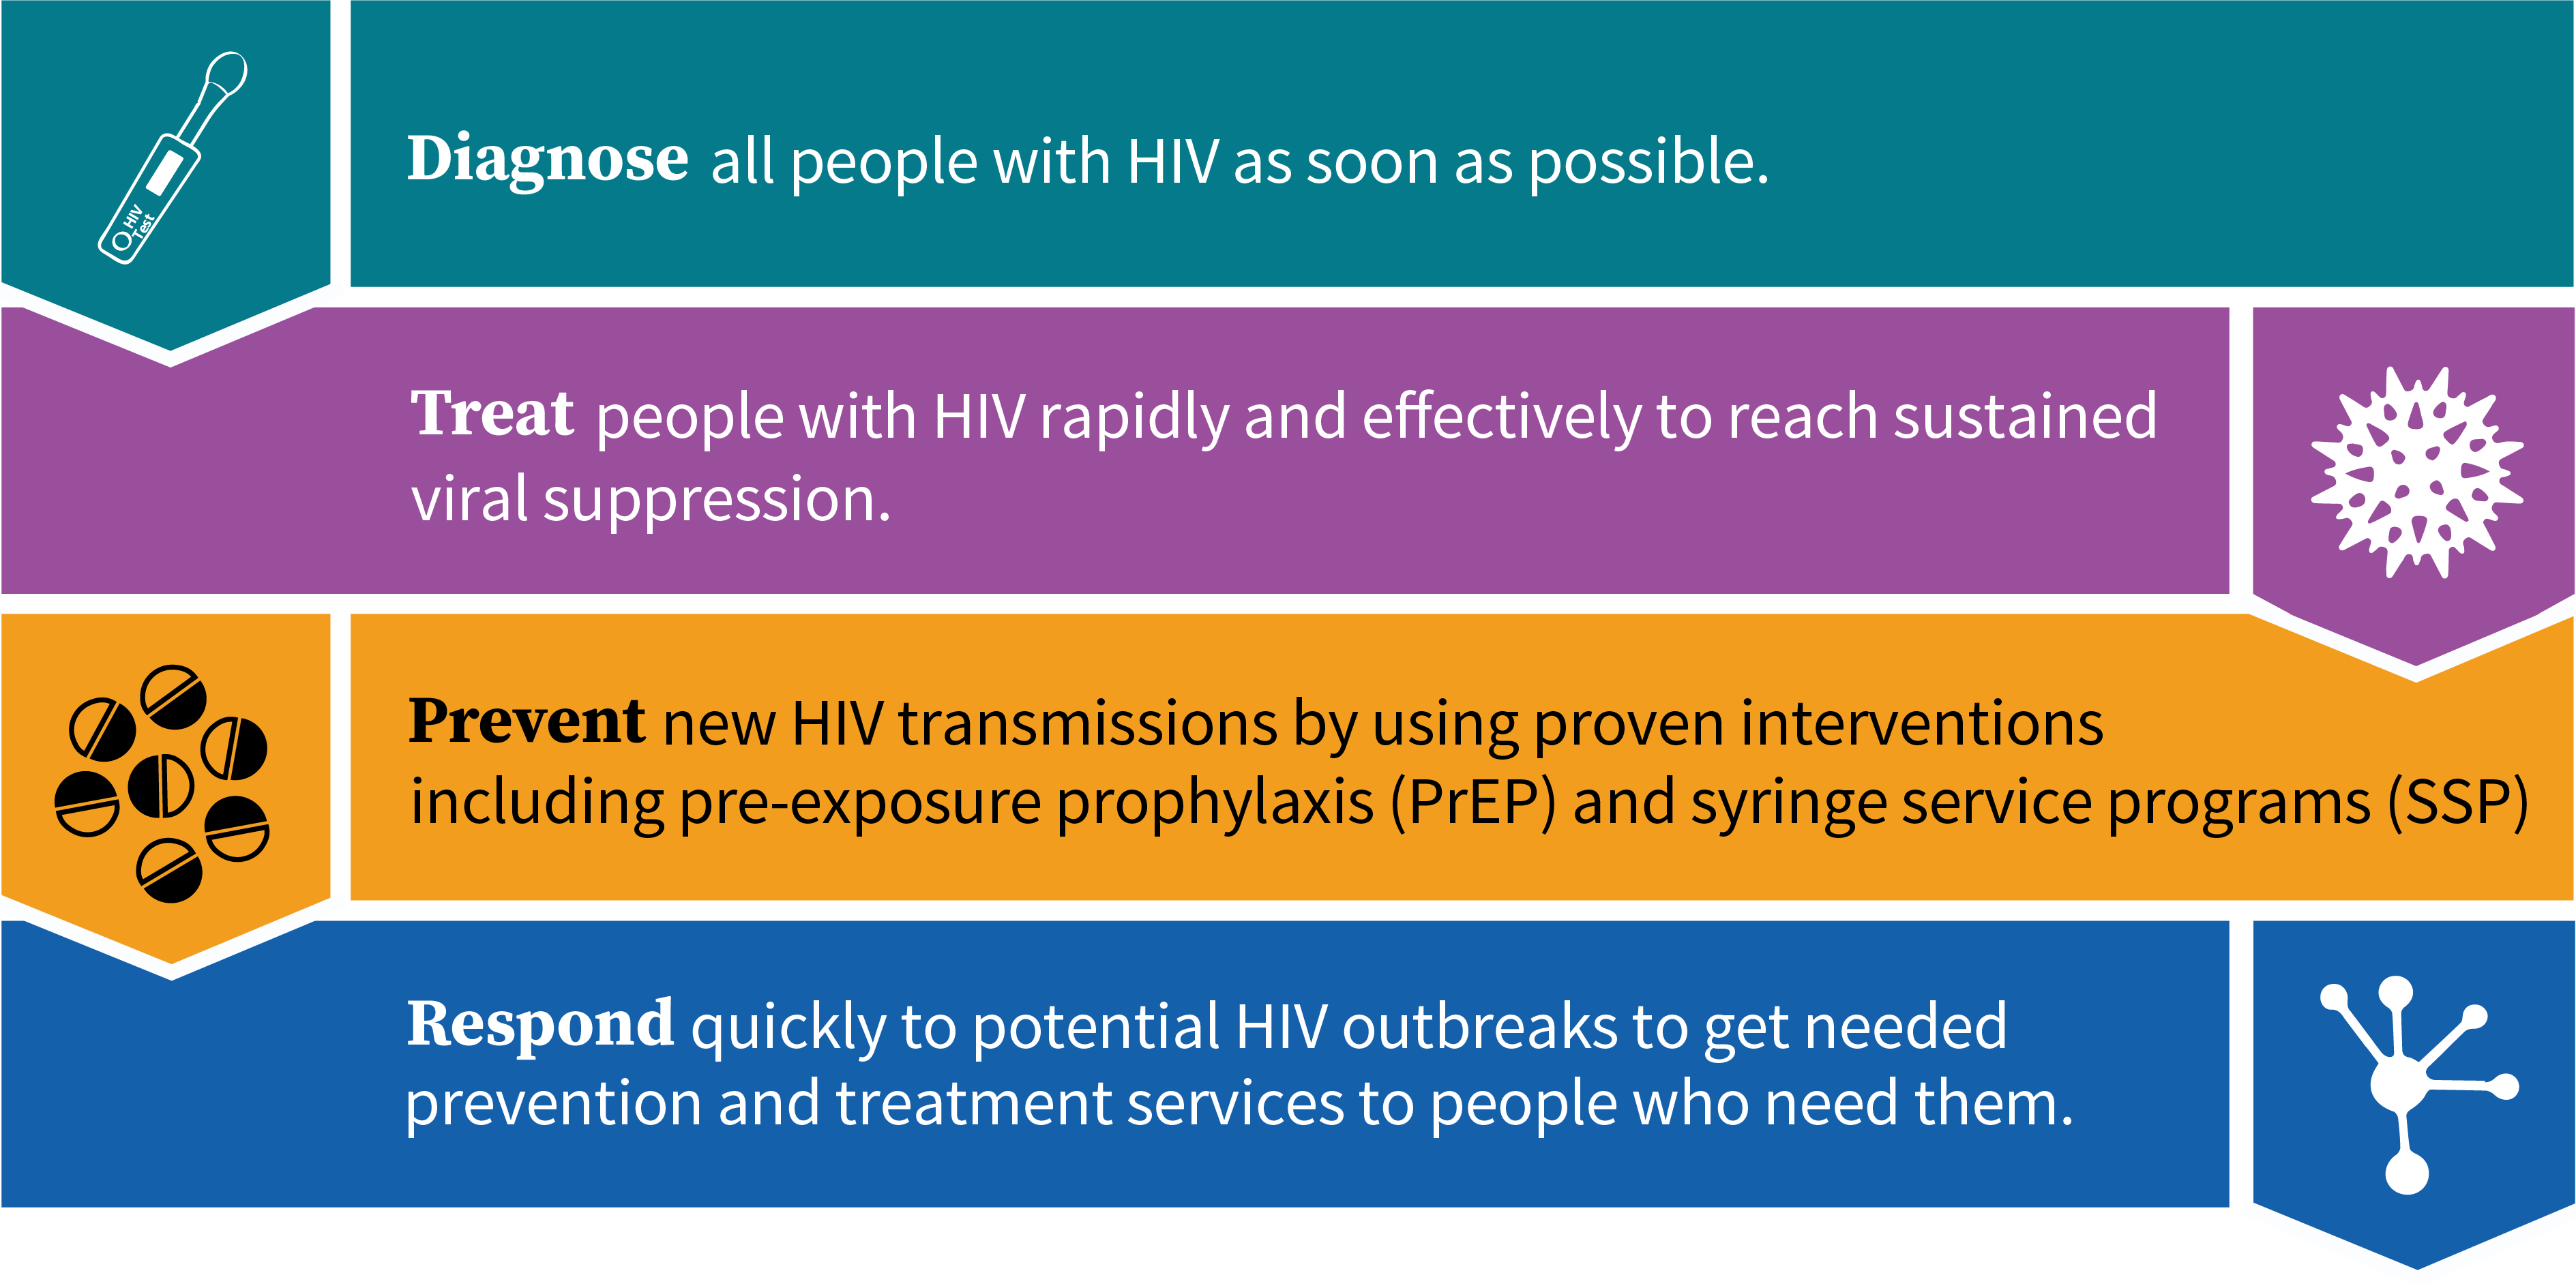 End the HIV Epidemic initiative: 4 strategies